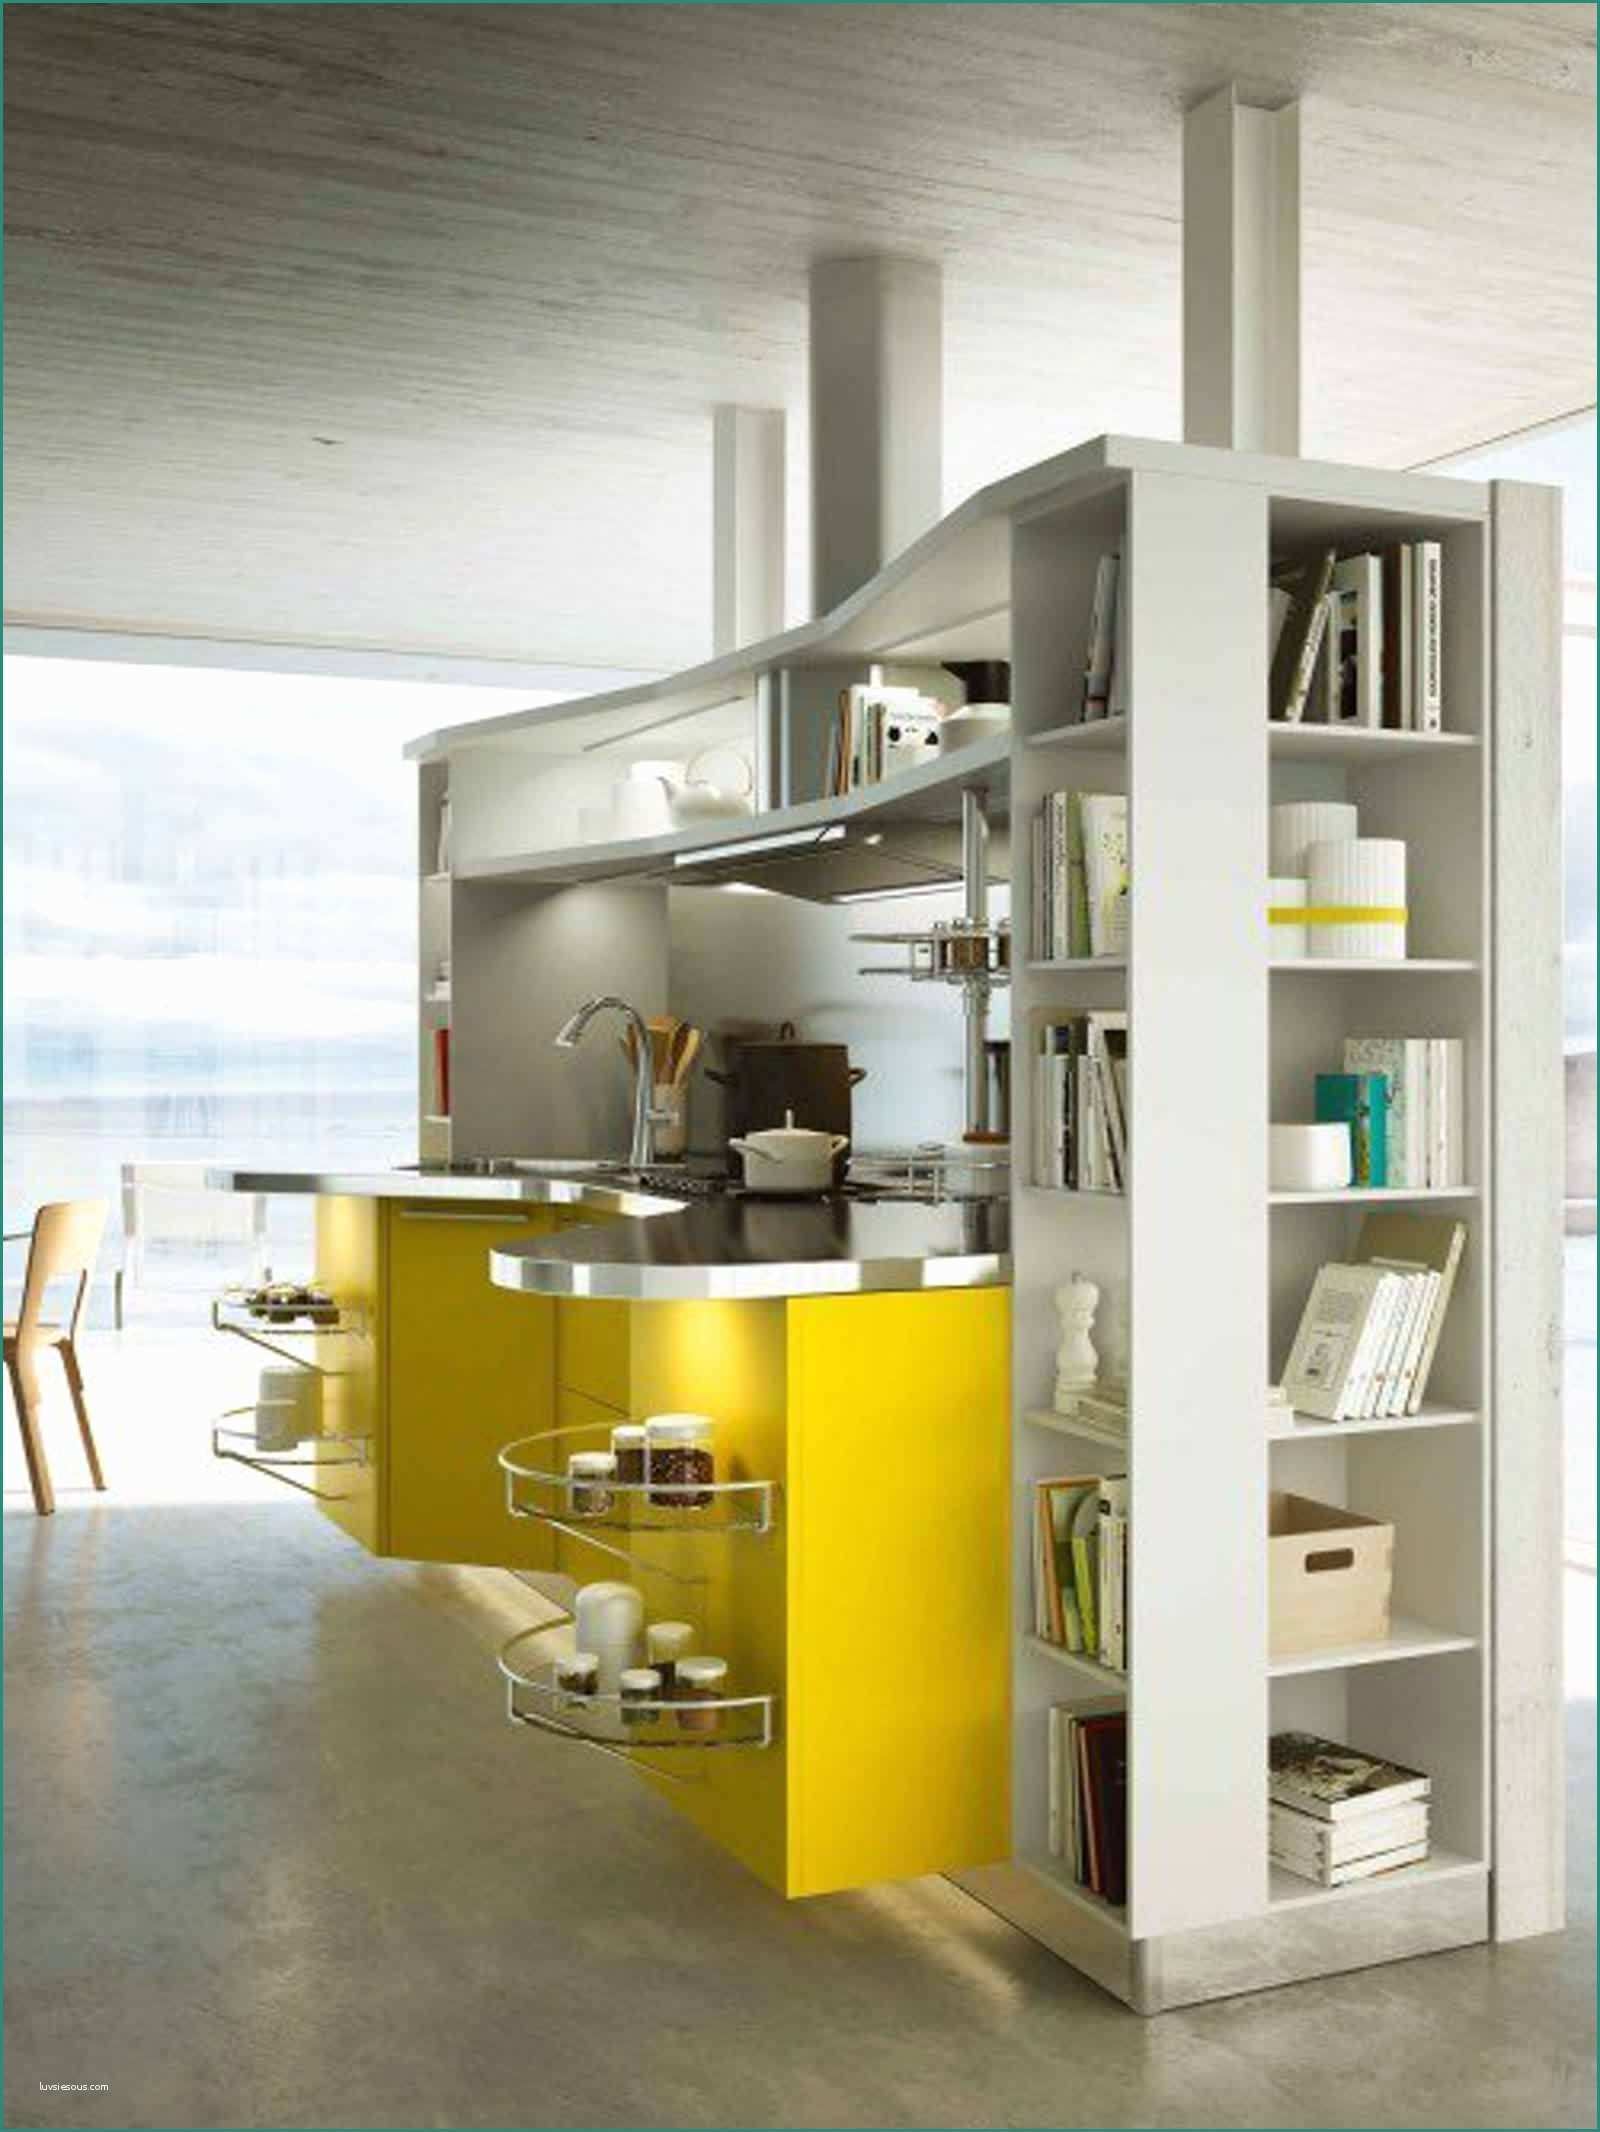 Berloni Cucine Moderne E Stunning Cucine Moderne Berloni Prezzi Ideas